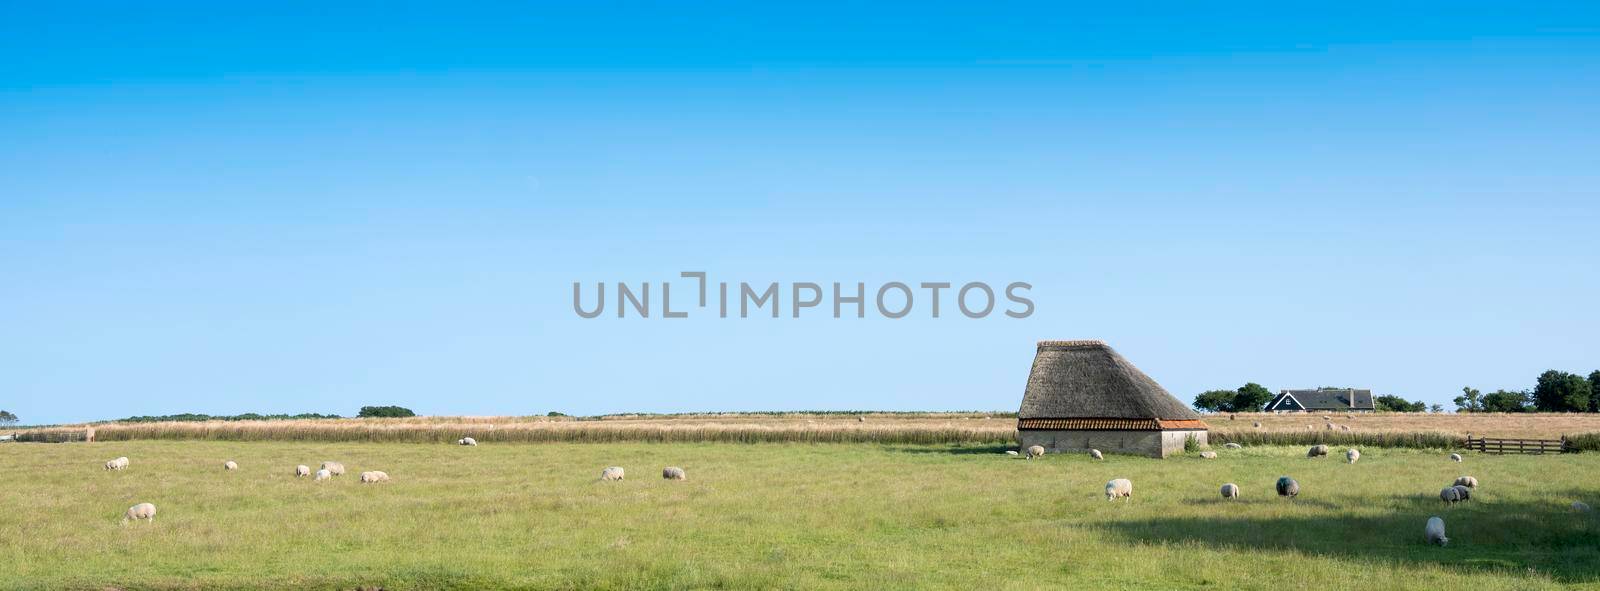 sheep in grassy meadow on dutch island of texel in the netherlands by ahavelaar